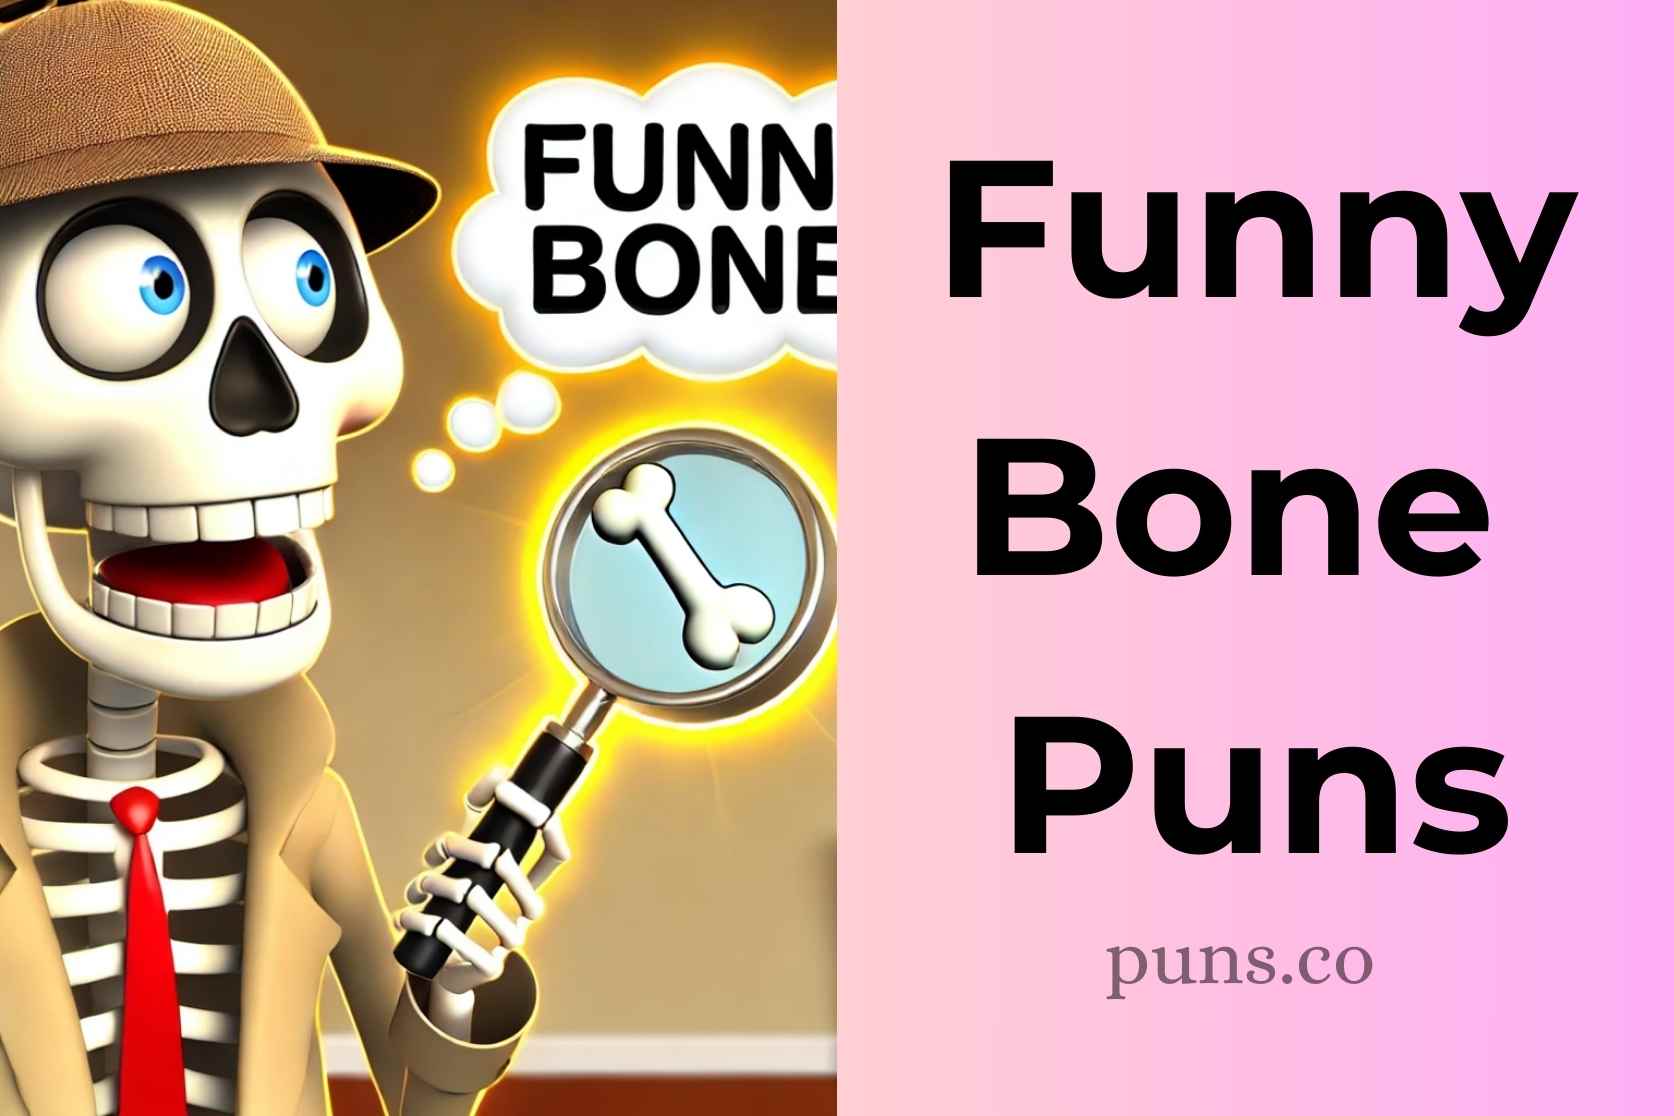 Funny bone